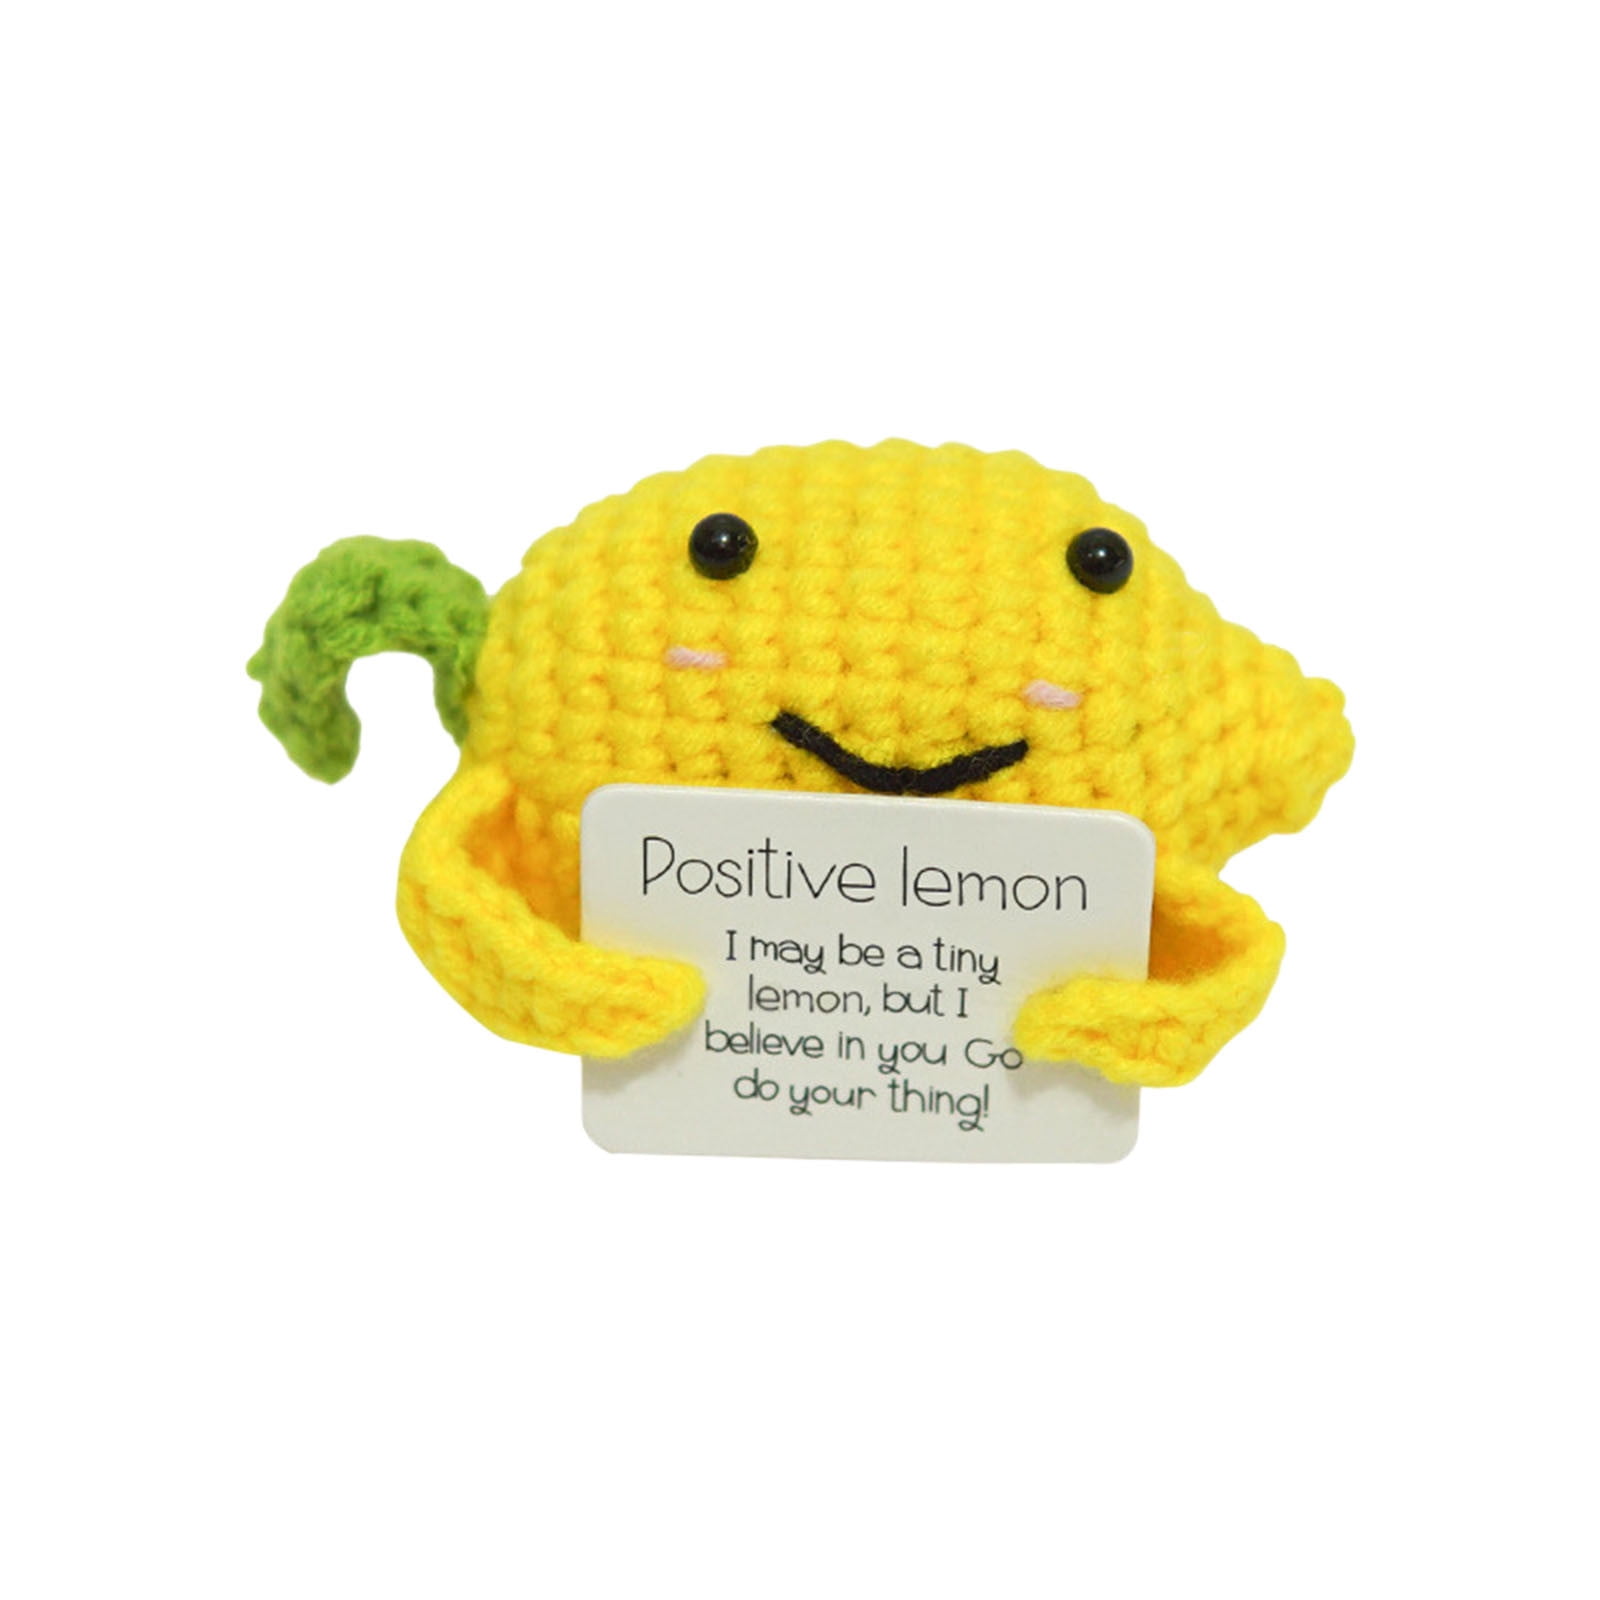 Handmade Emotional Support Pickled Cucumber Gift, Cute Crochet Emotional  Support Pickles with Funny Stickers and Base, Emotional Support Pickle  Gifts